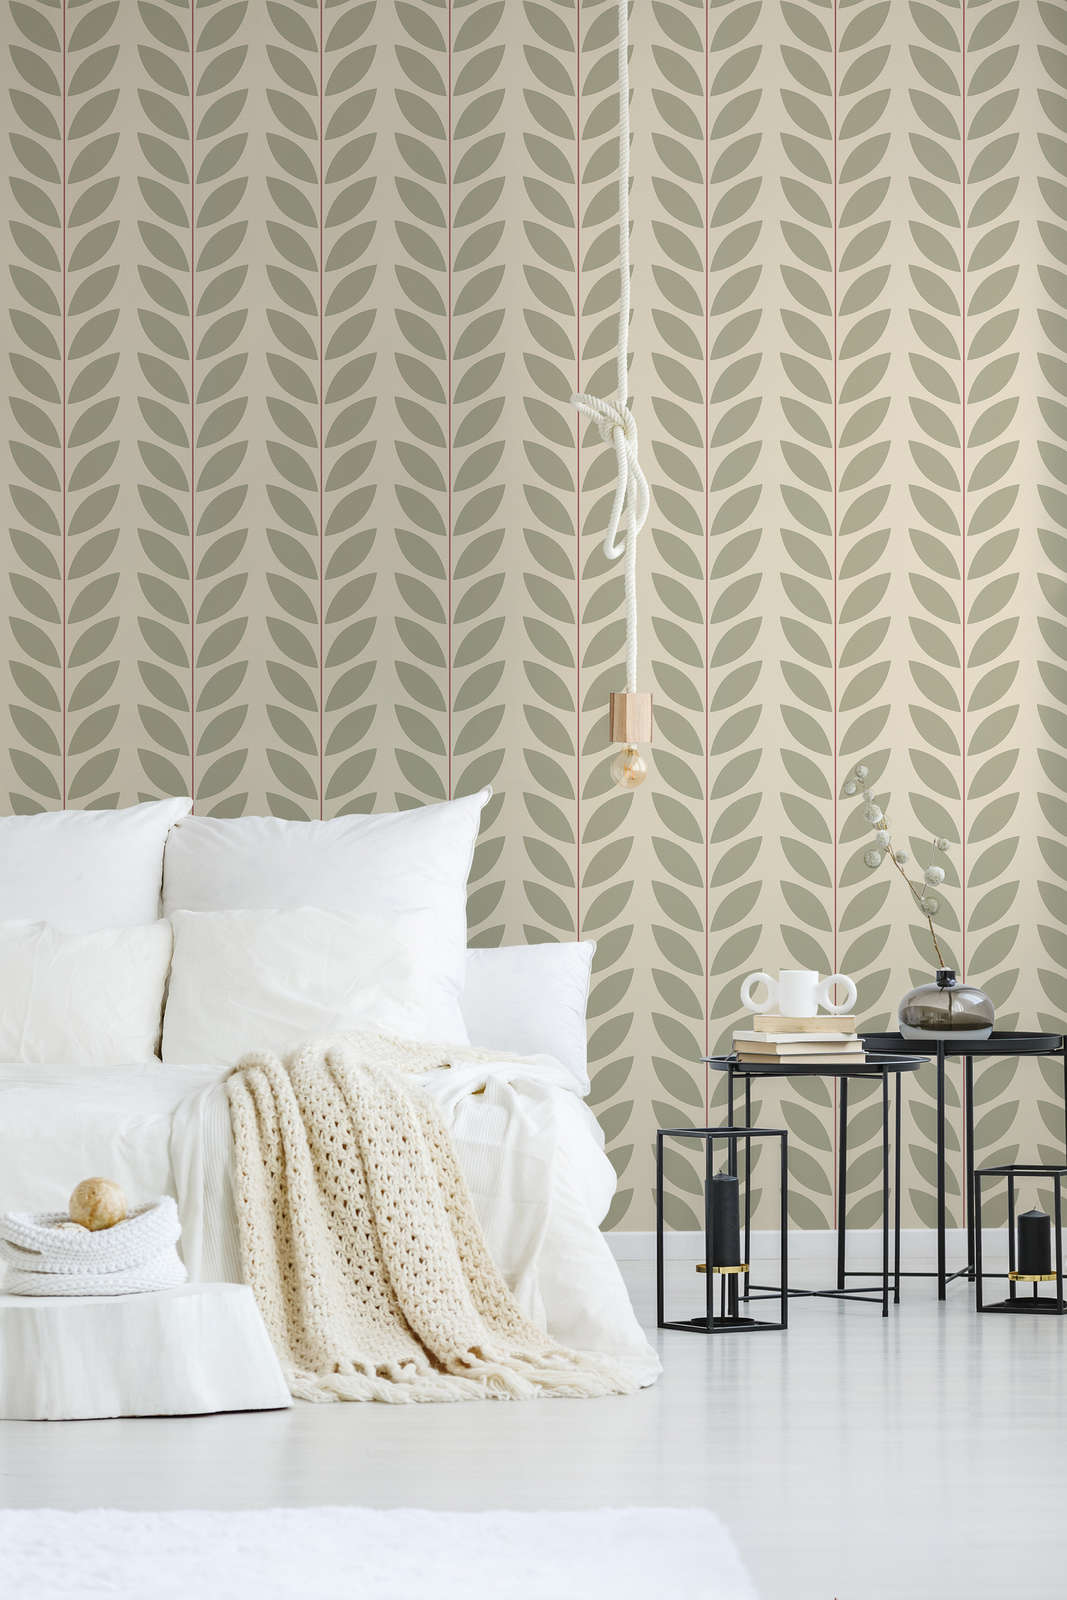             Leaf pattern non-woven wallpaper in retro look - beige, green, red
        